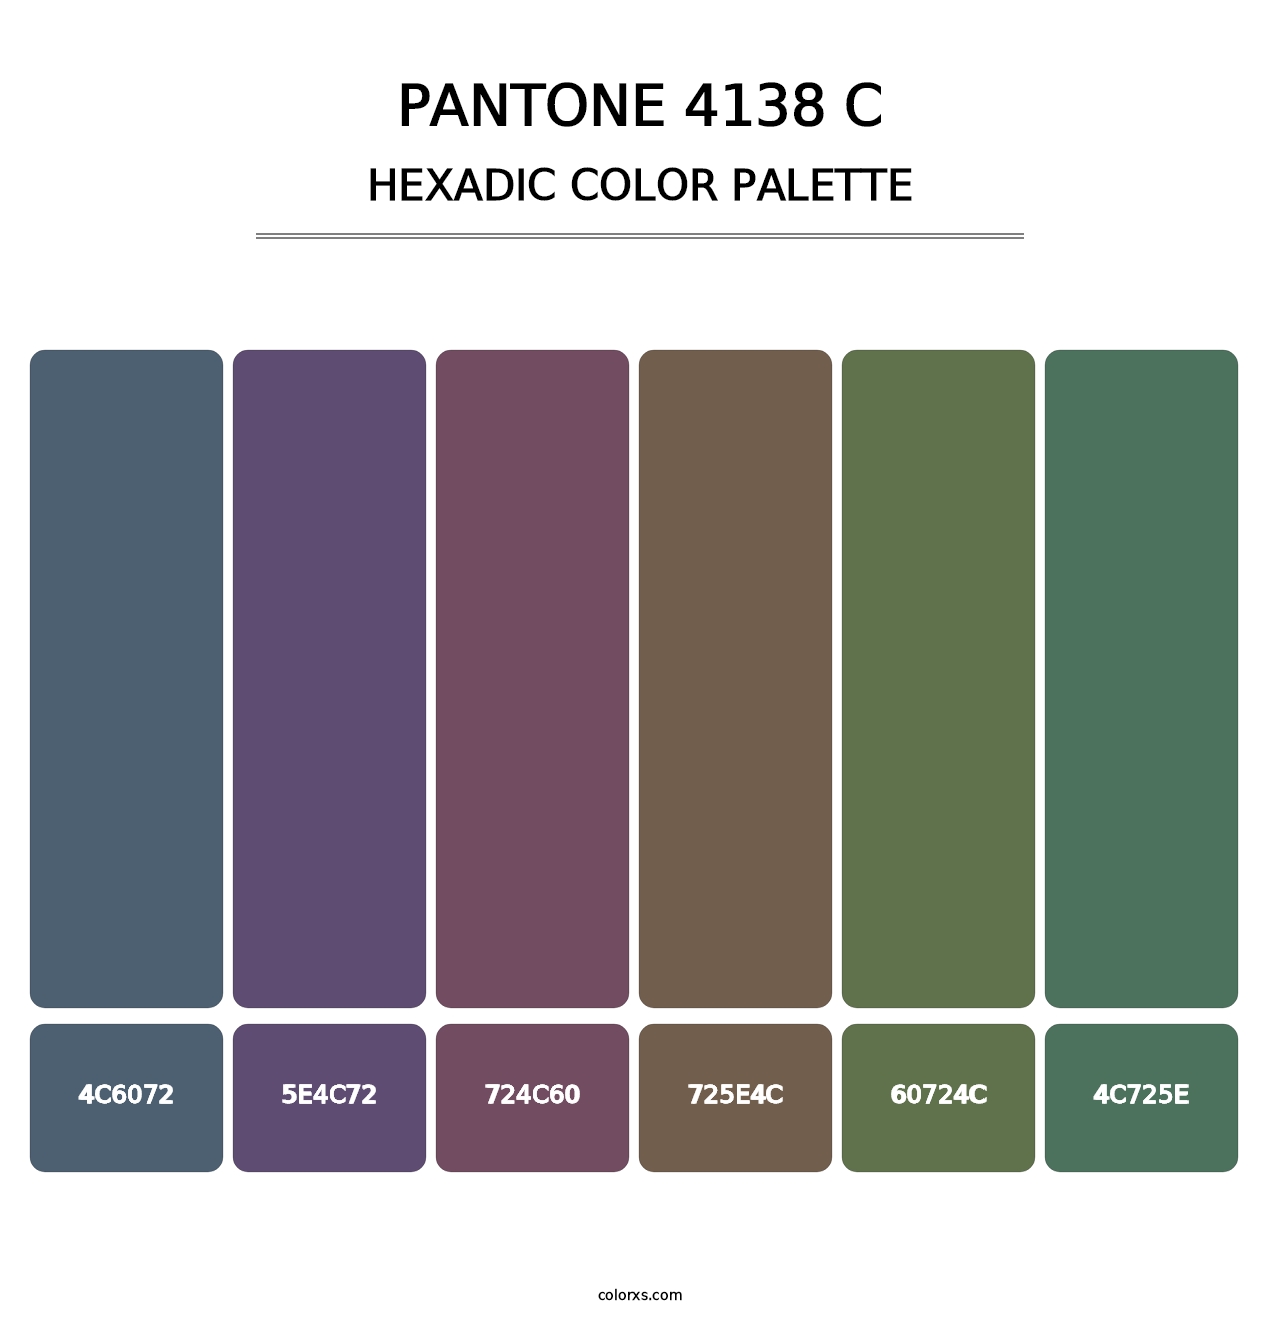 PANTONE 4138 C - Hexadic Color Palette